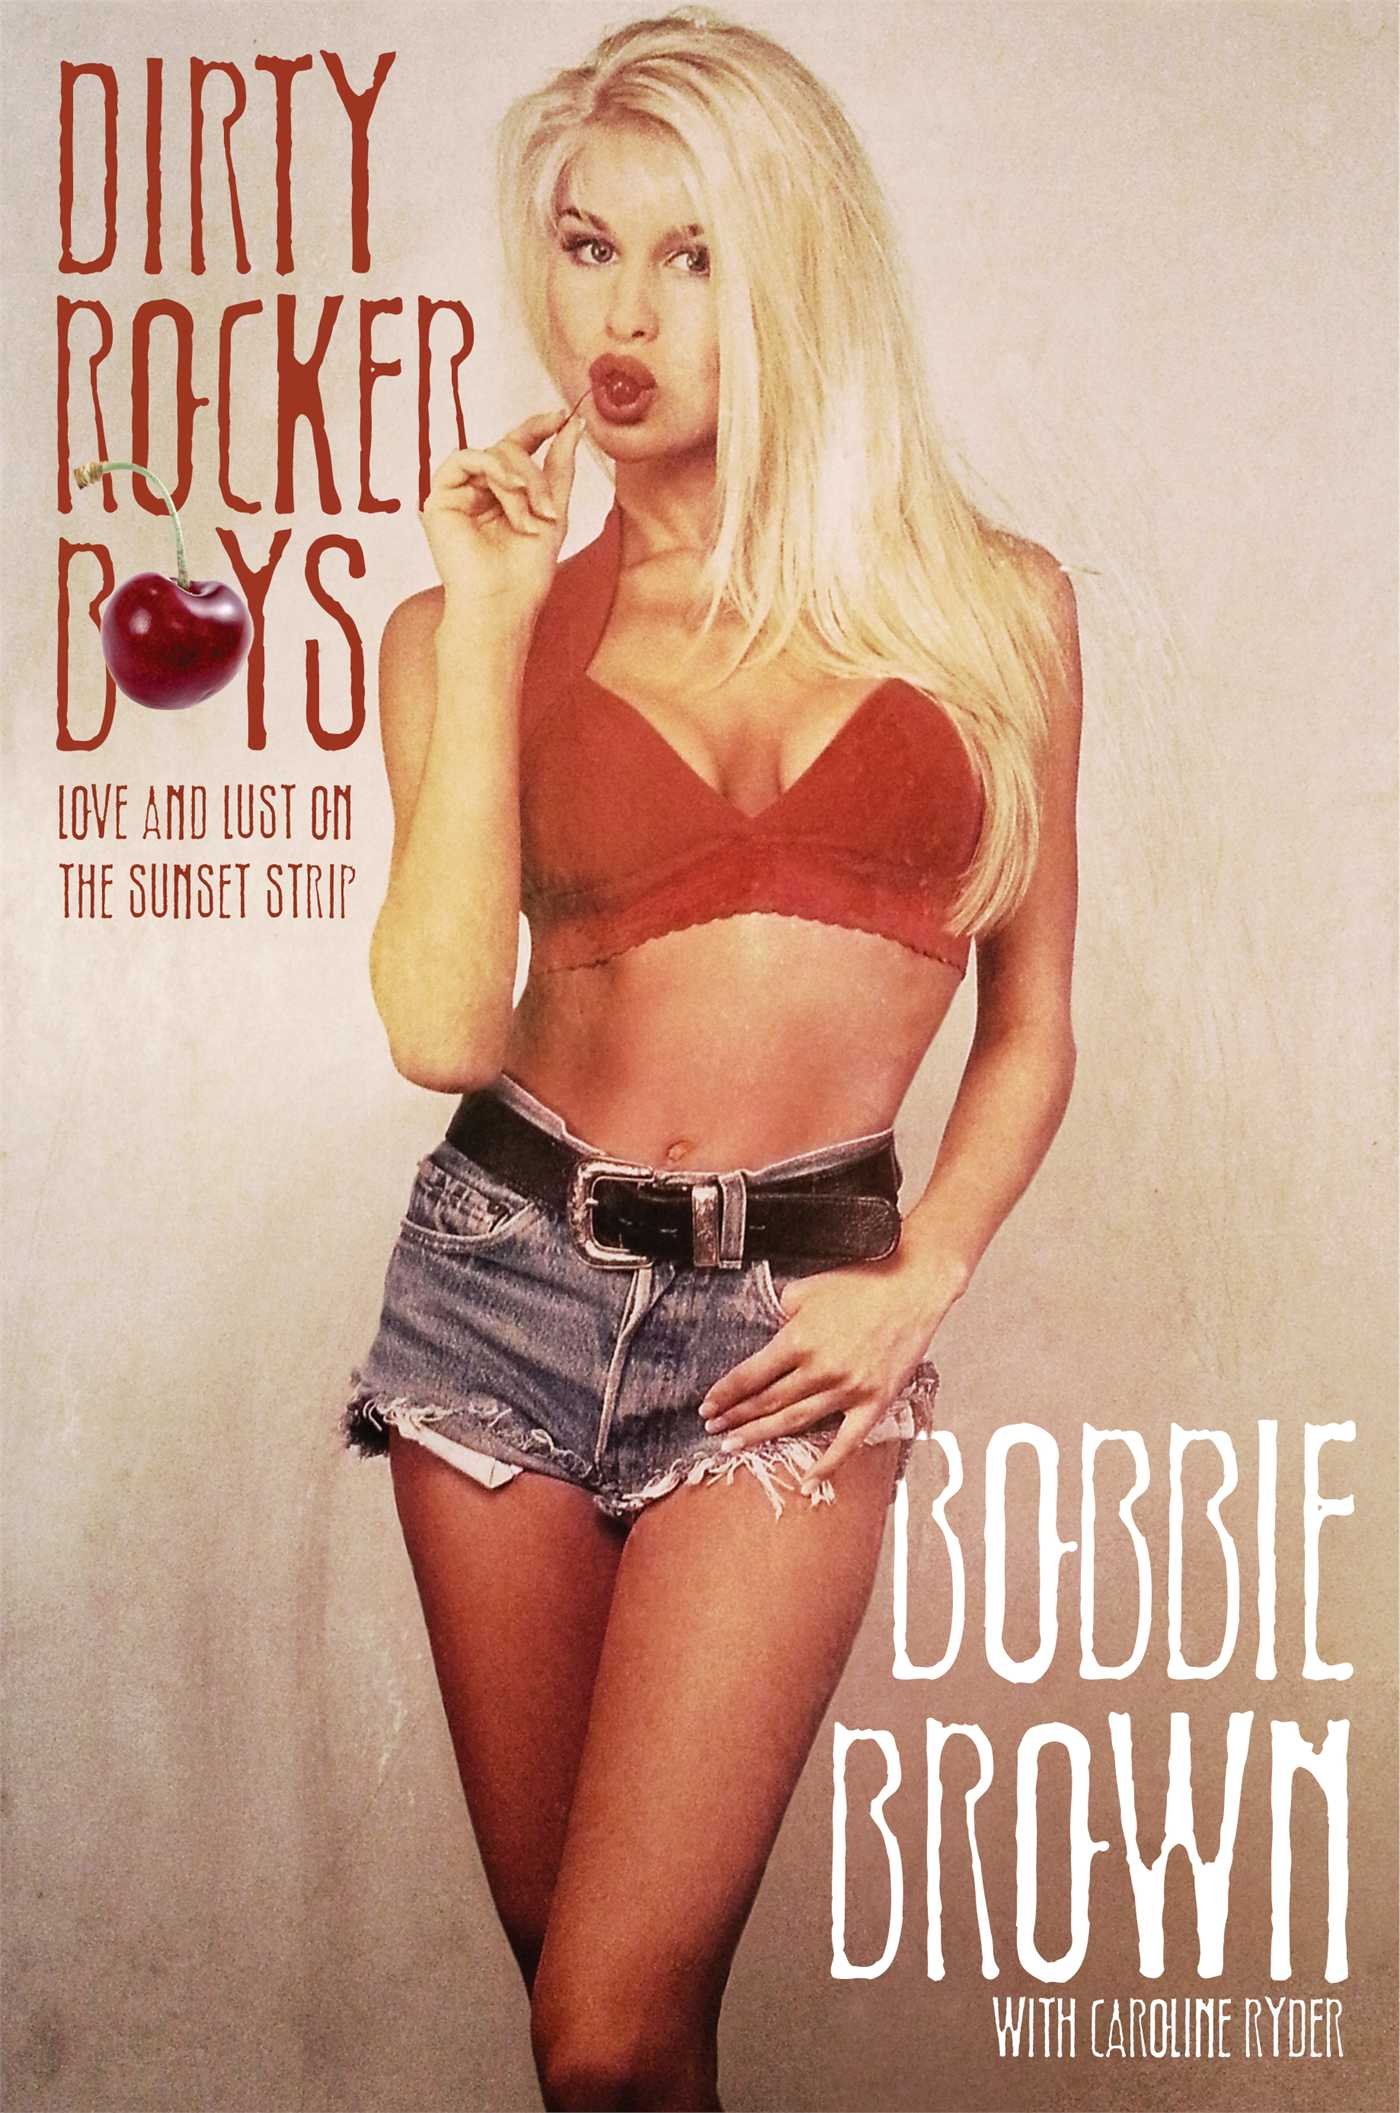 Backstage Pass #22 w/ Bobbie Brown - "Dirty Rocker Boys"